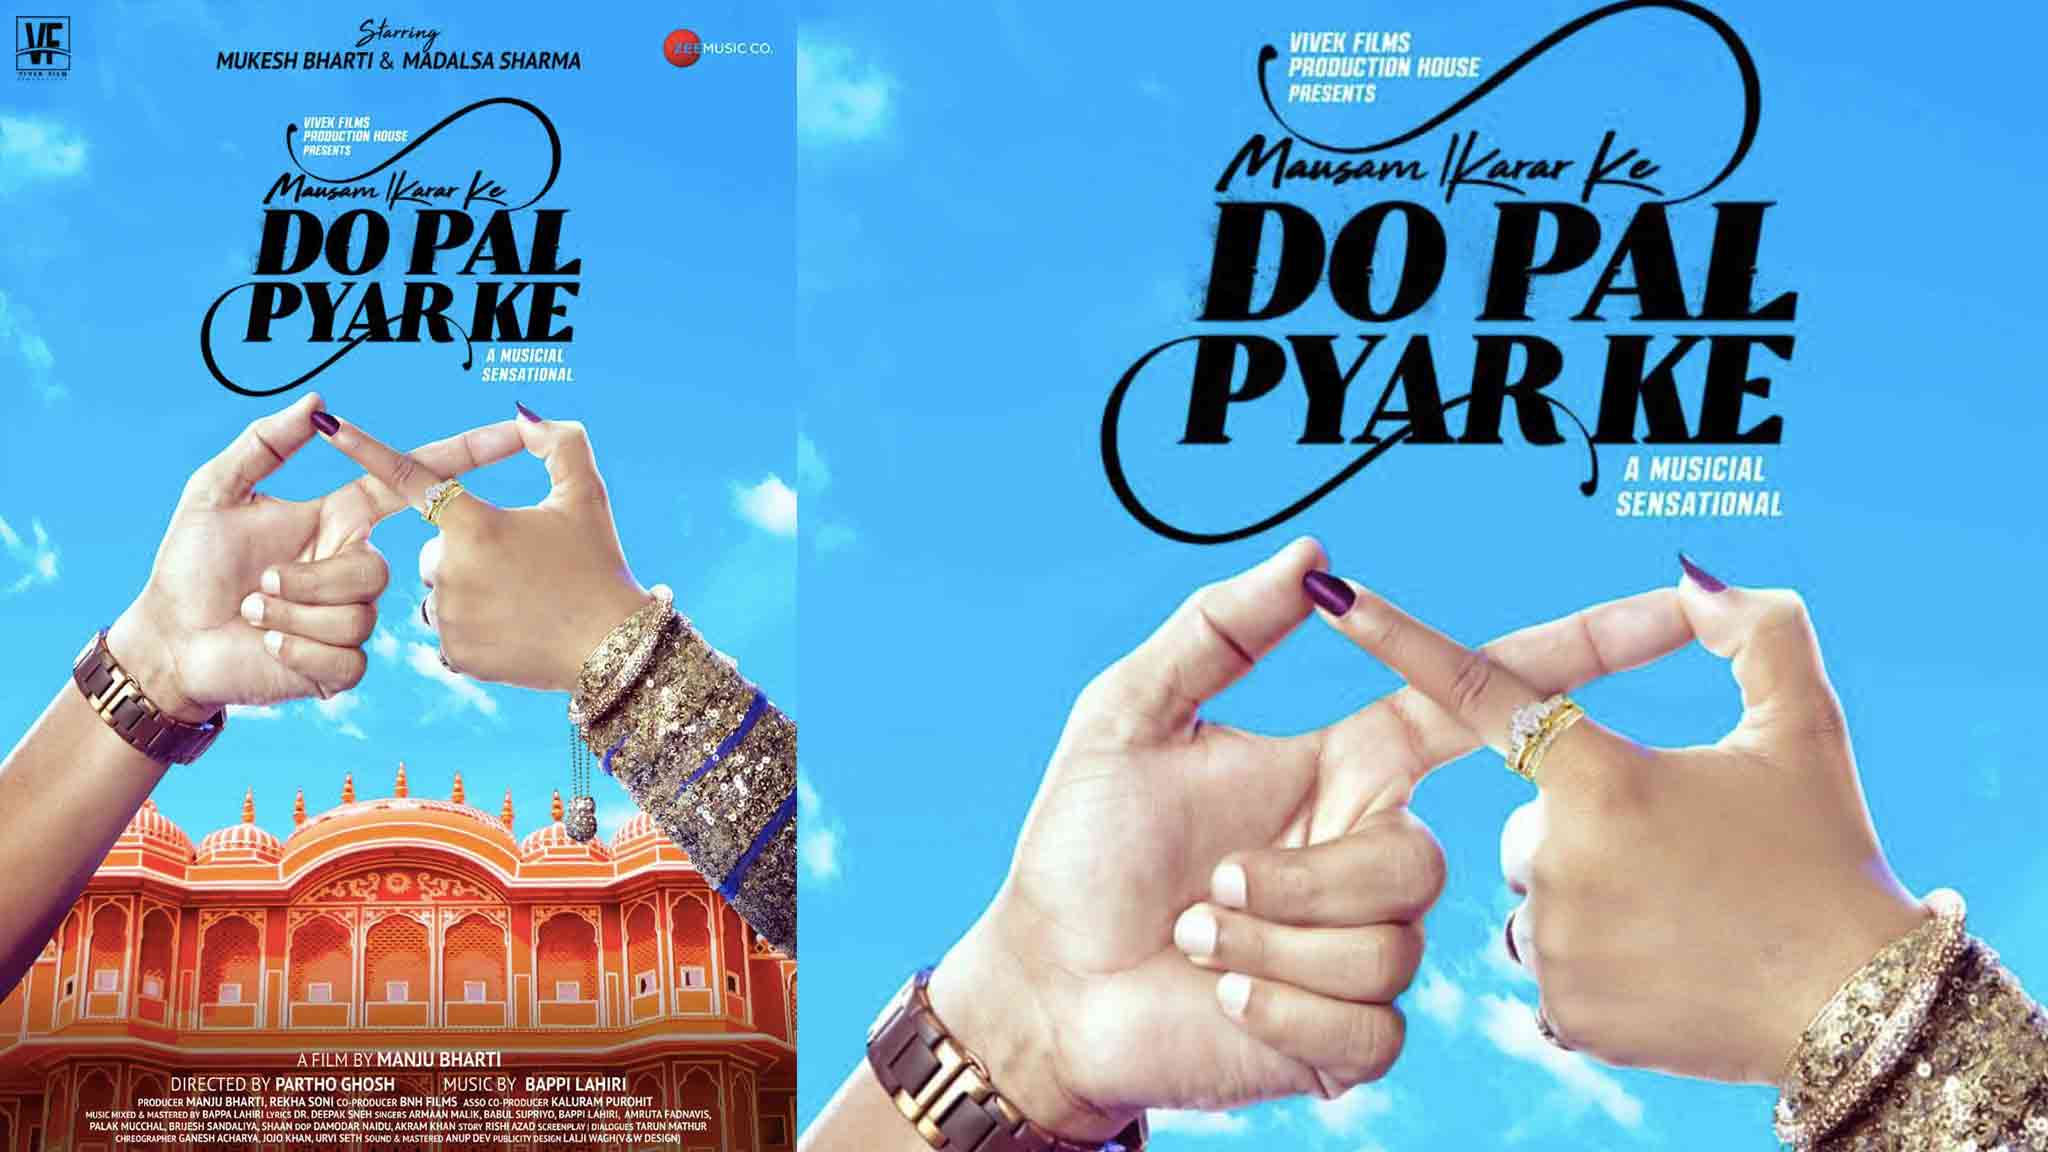 Vivek Films Production House Gives Us A New Teaser Poster Of Mausam Ikrar Ke, Do Pal Pyar Ke